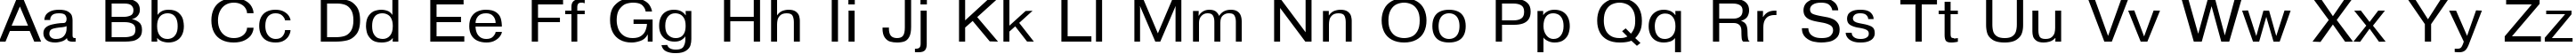 Пример написания английского алфавита шрифтом NTHarmonica Normal110n